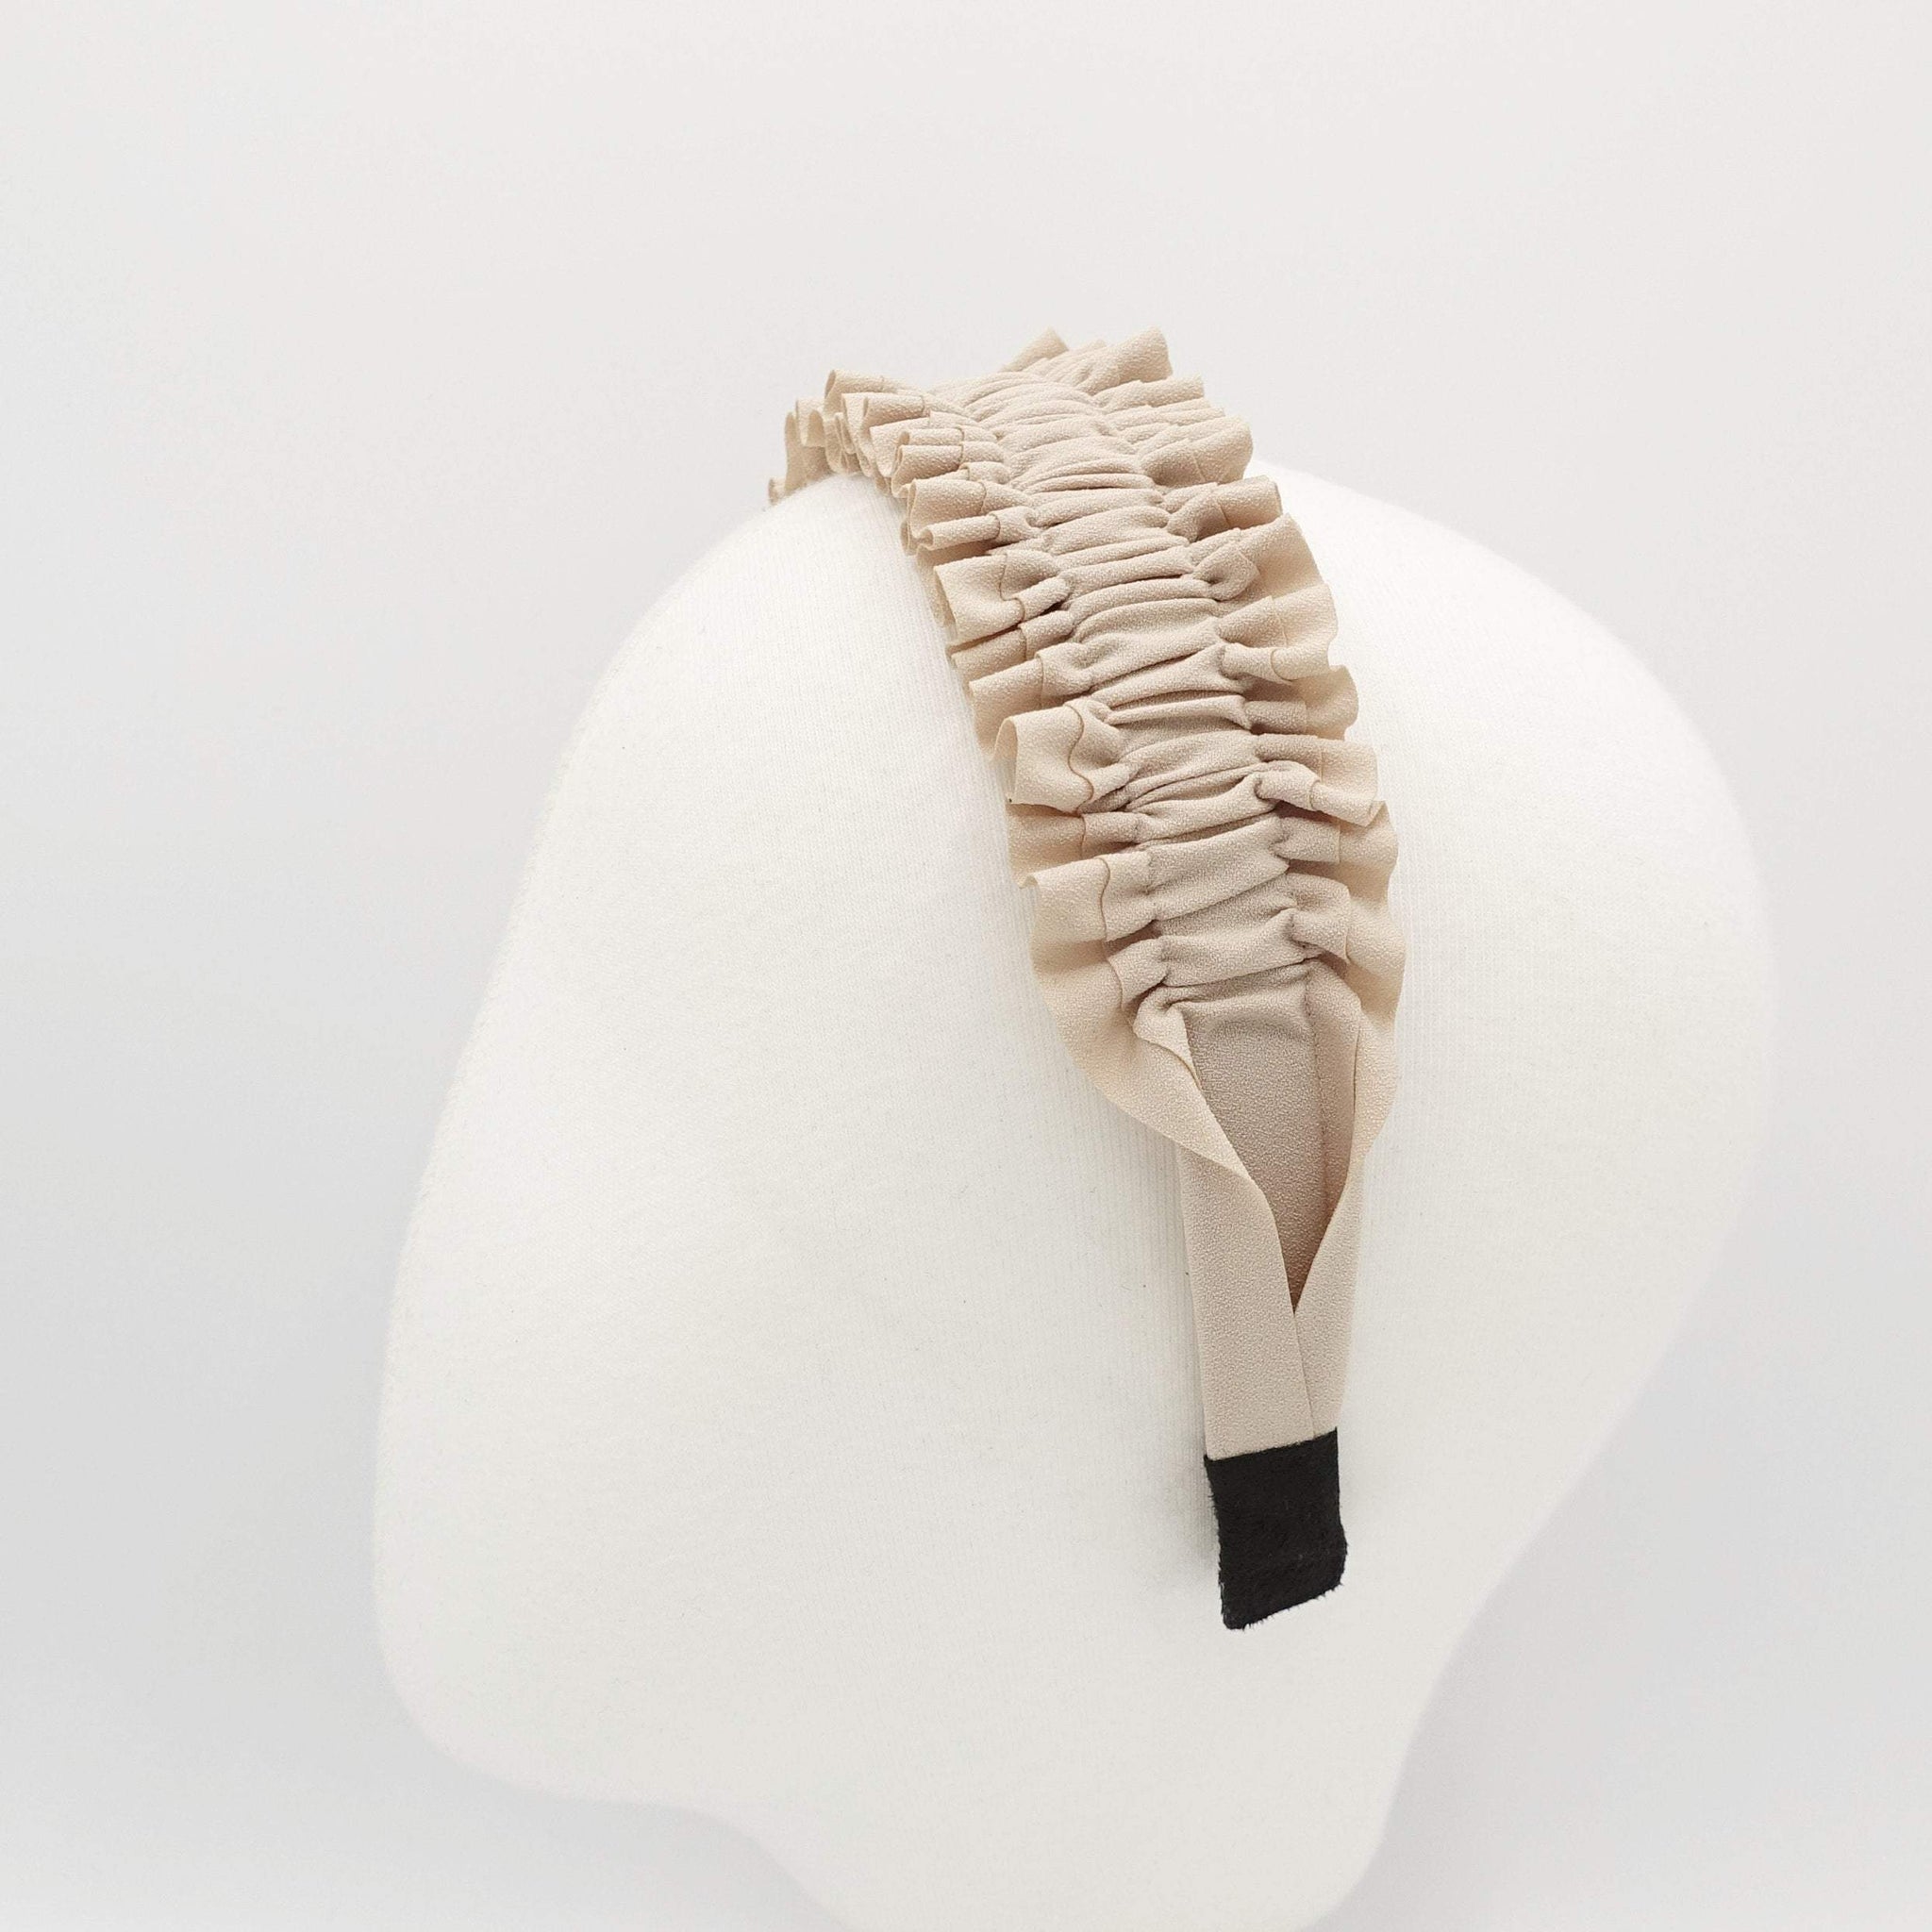 VeryShine thin pleated sewn headband quality hairband hair accessory for women